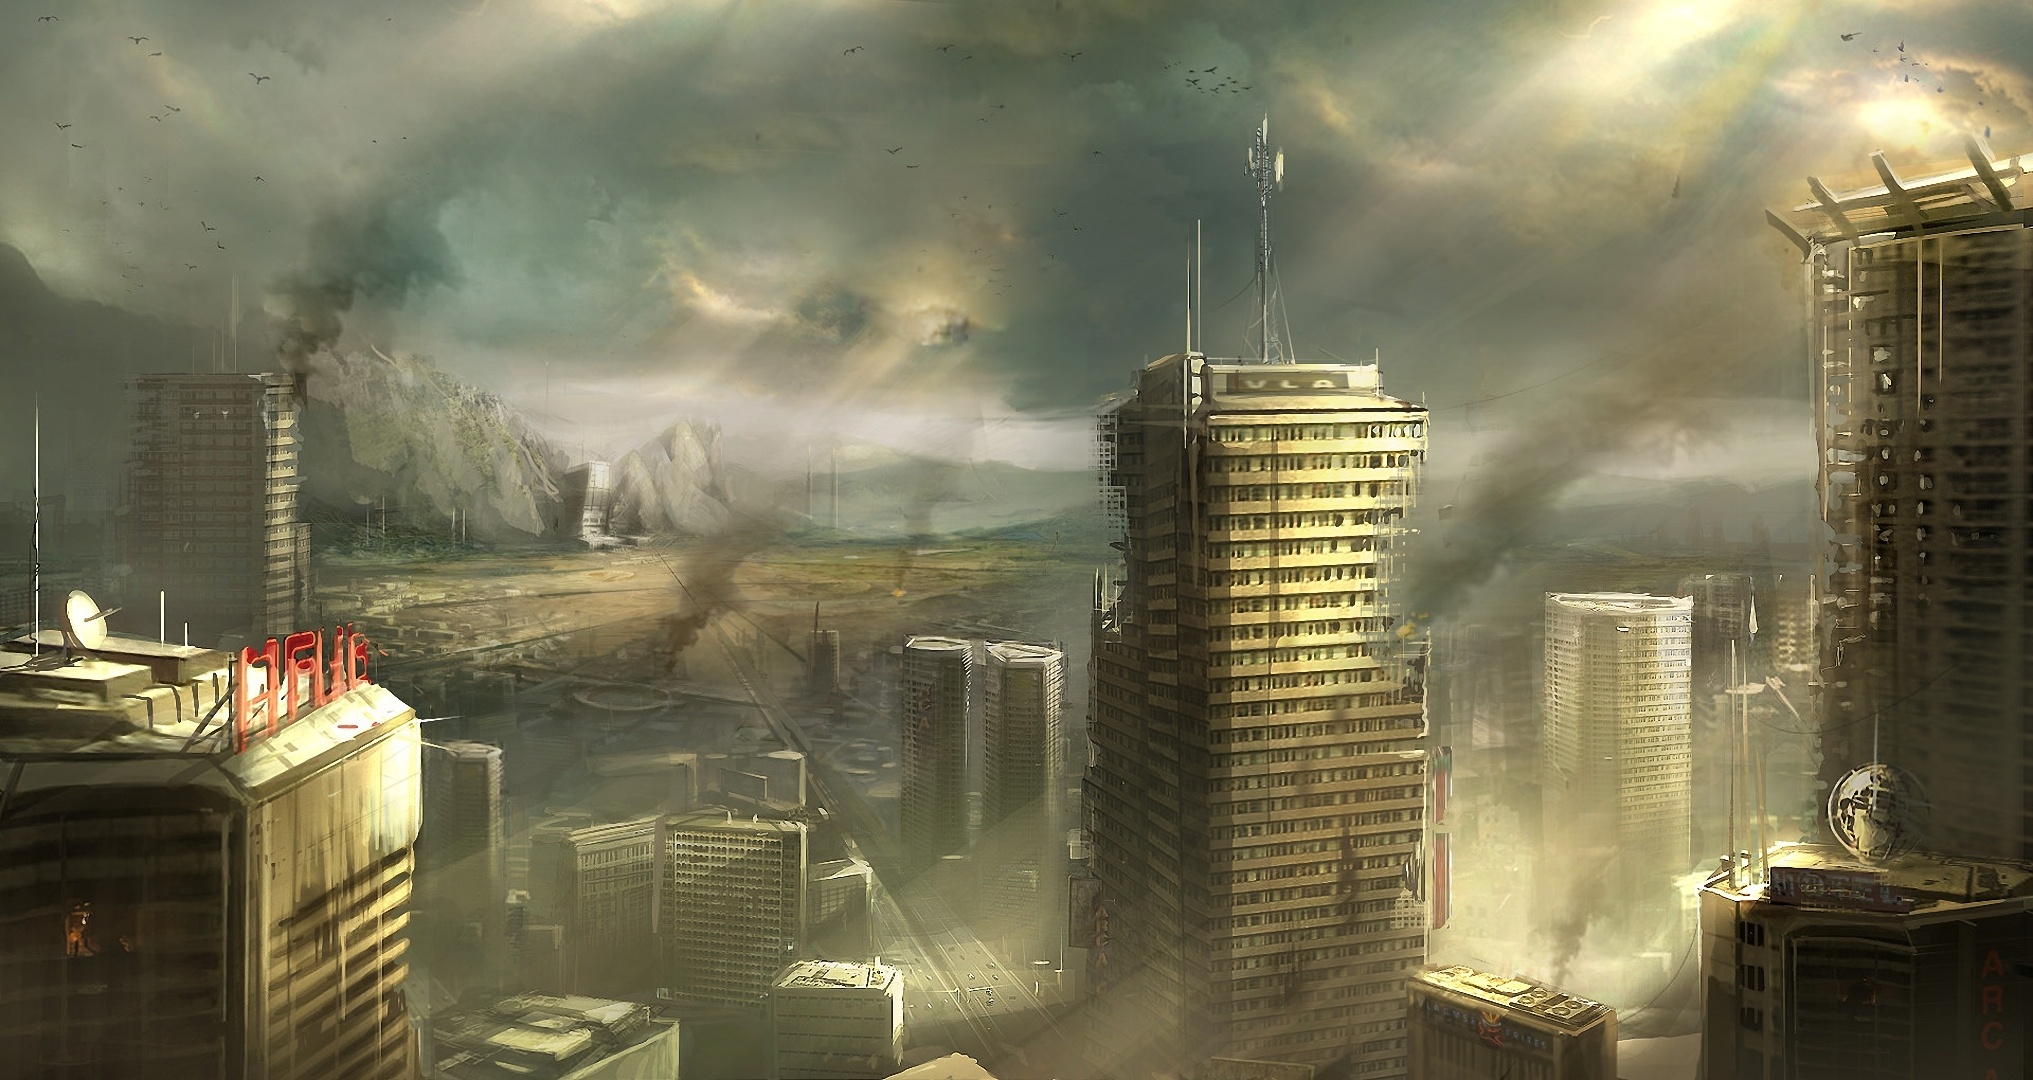 Destroyed Anime City Background